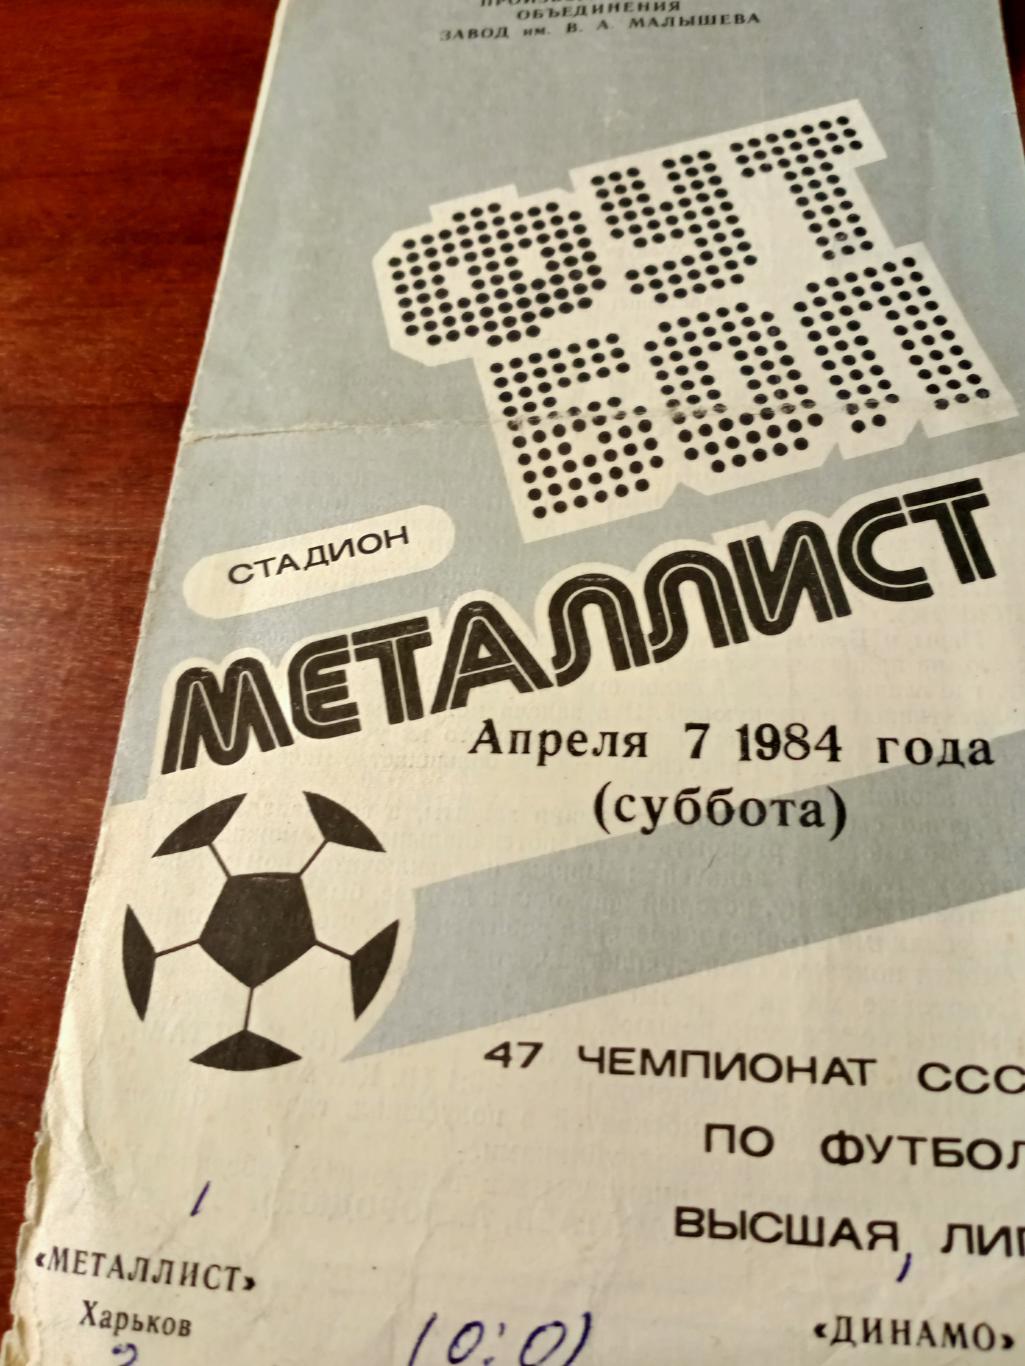 Металлист Харьков - Динамо Москва. 7 апреля 1984 год